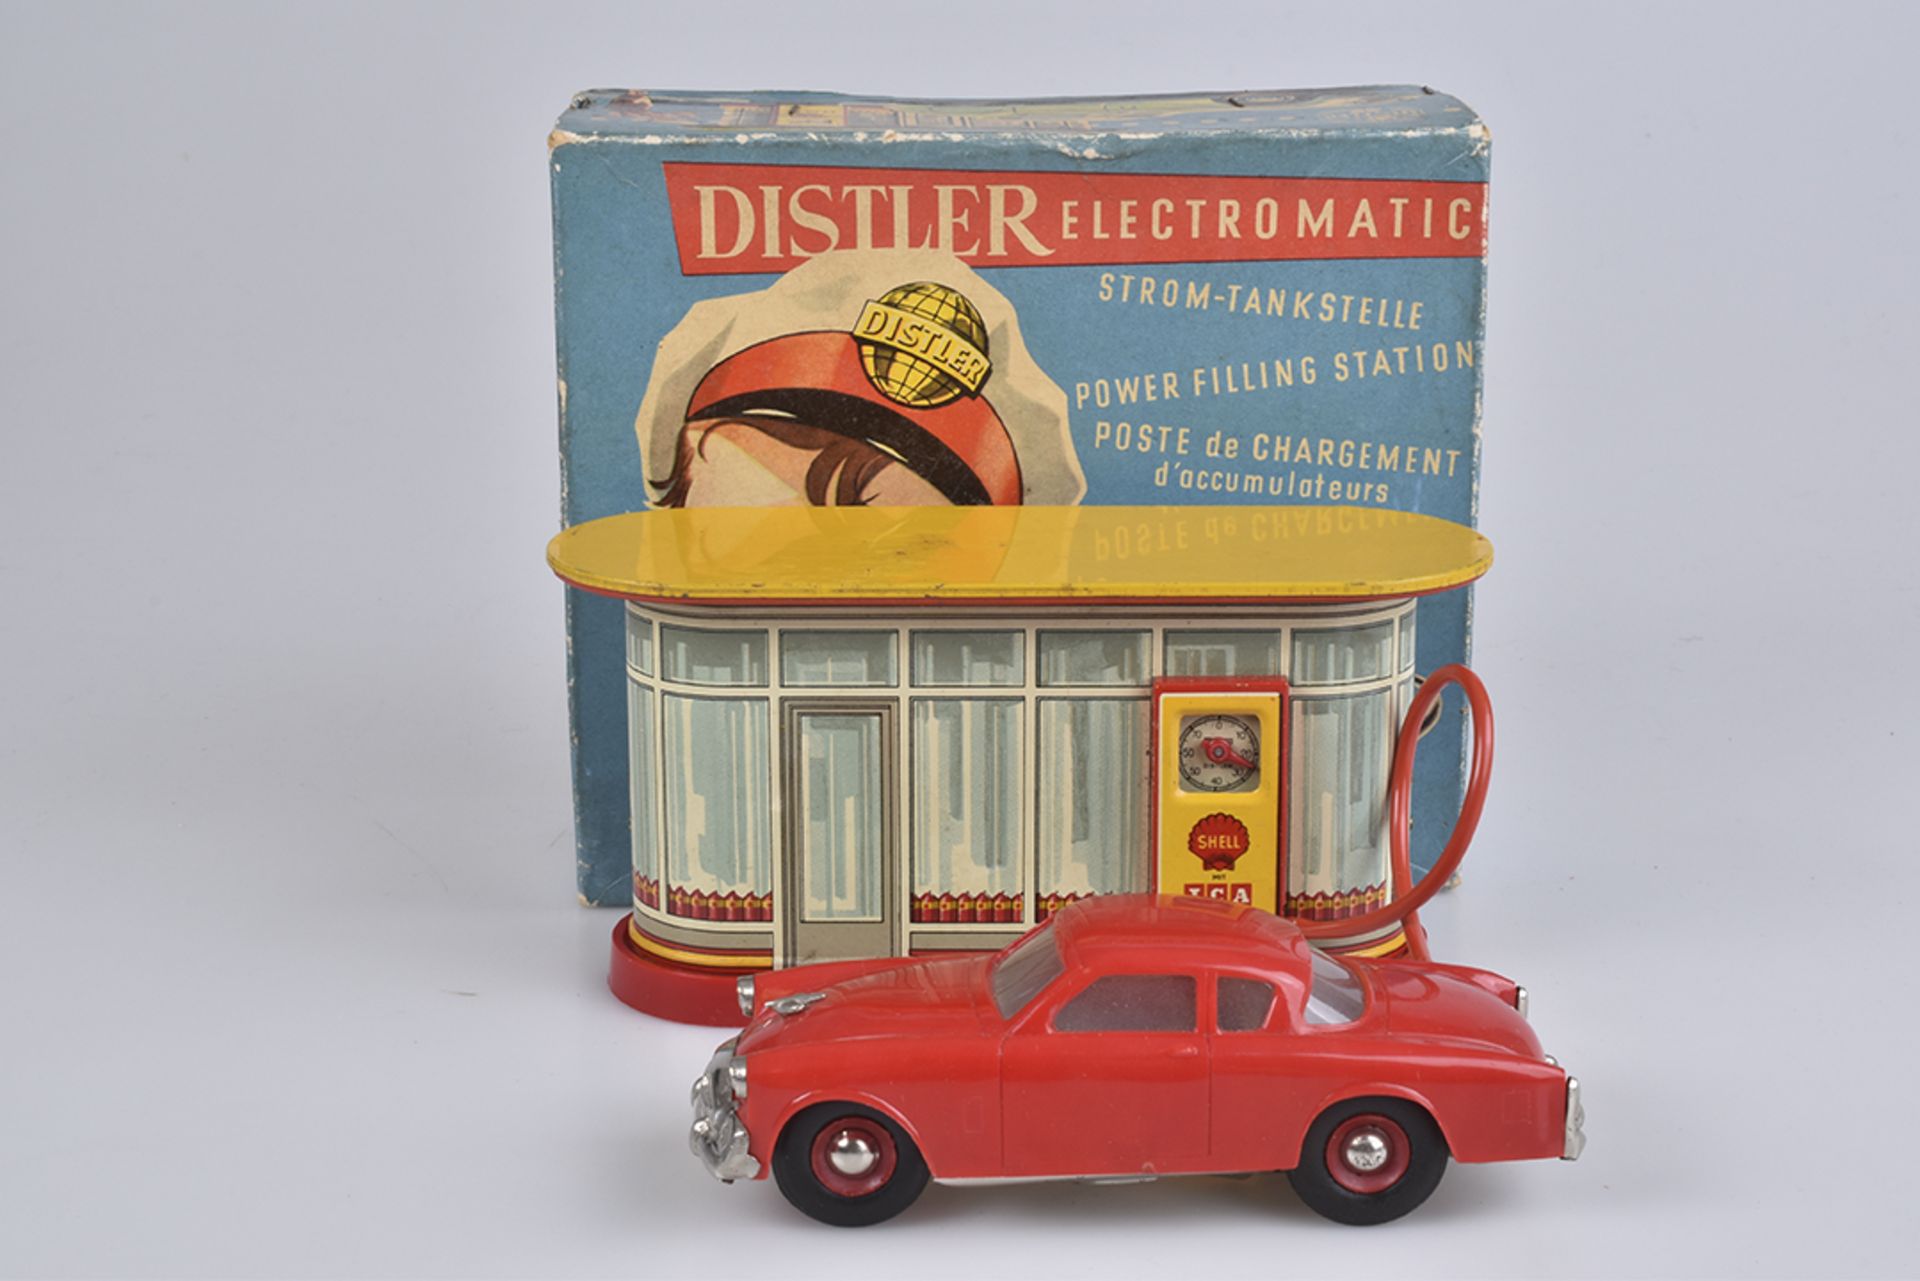 DISTLER Electromatic Strom-TankstelleBlech, lithografiert, 60er Jahre, mit Studebaker Auto, Shell